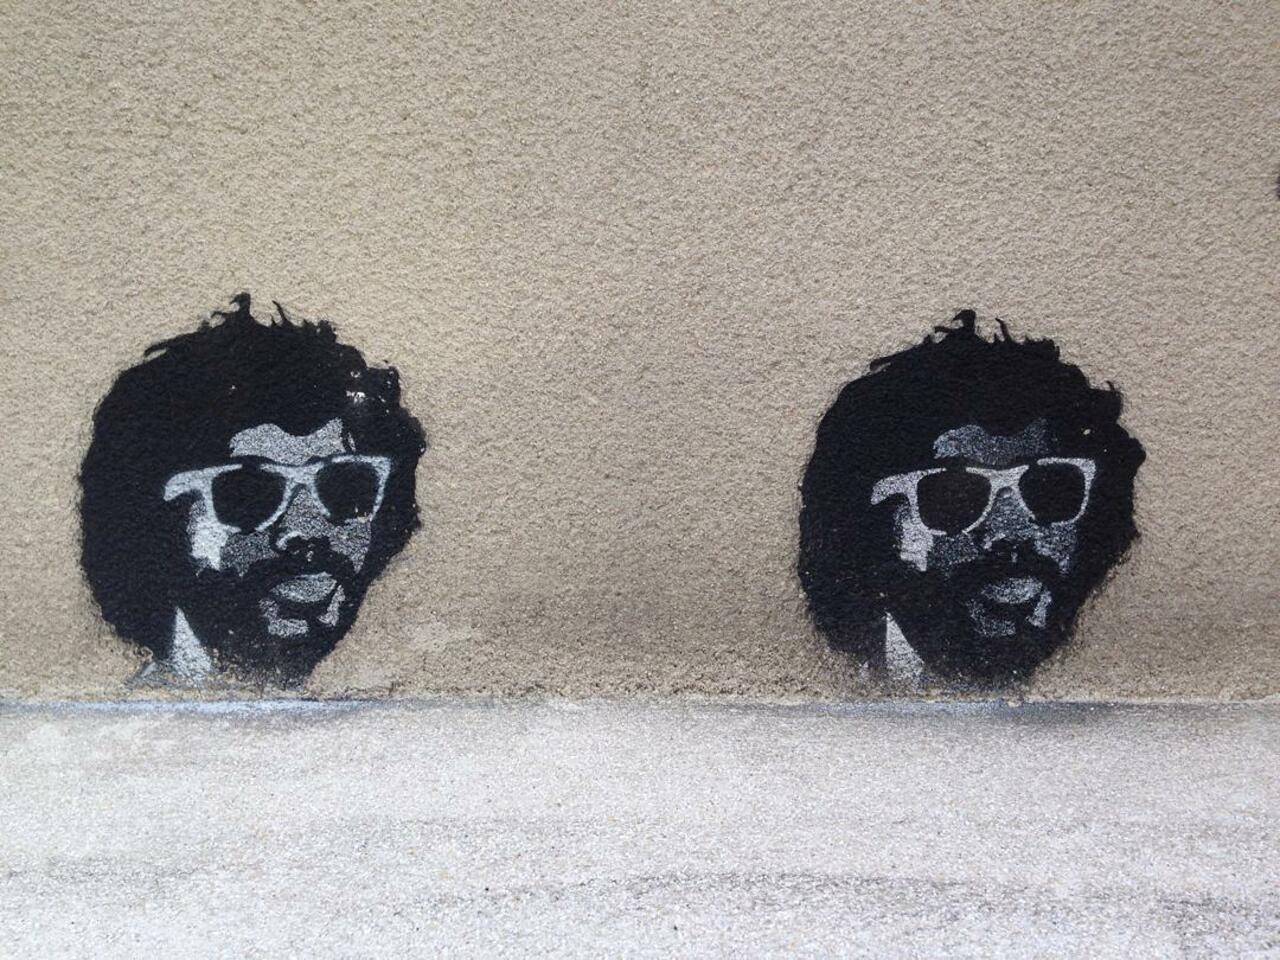 #Paris #graffiti photo by @streetrorart http://ift.tt/1MKKehF #StreetArt https://t.co/ZlJYANDwBg